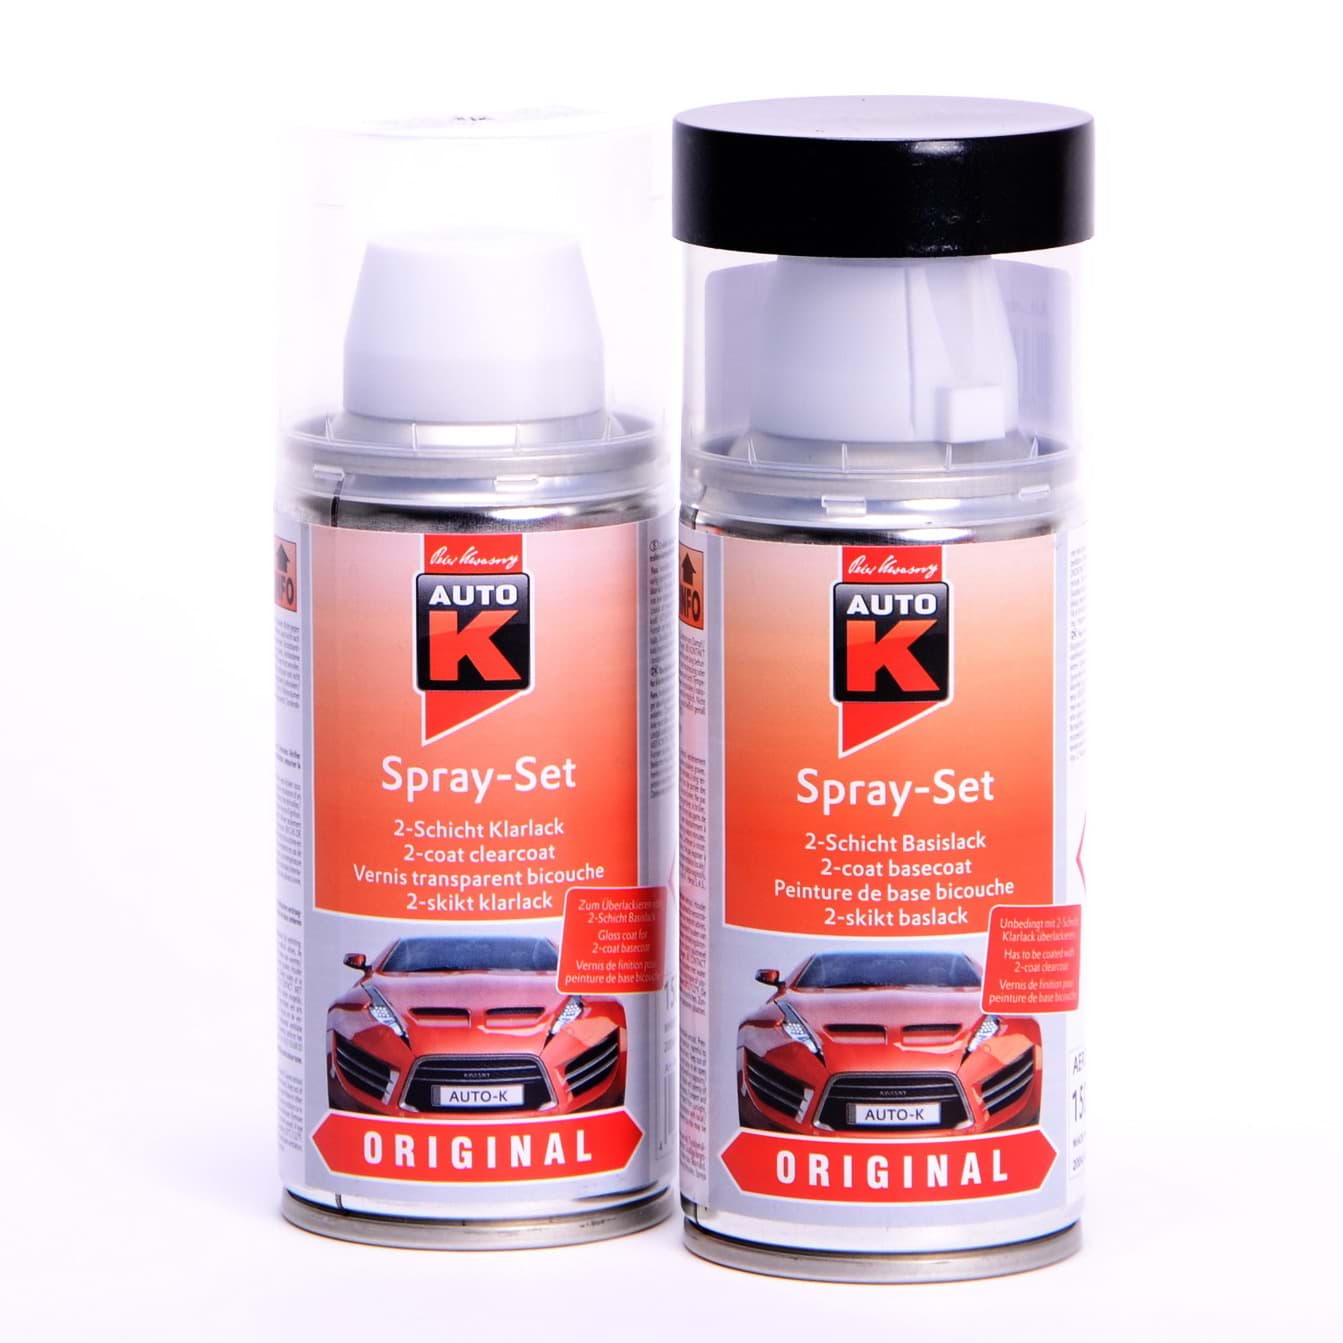 Auto-K Spray-Set Autolack für Opel 549 Marseillerot met 21366 resmi